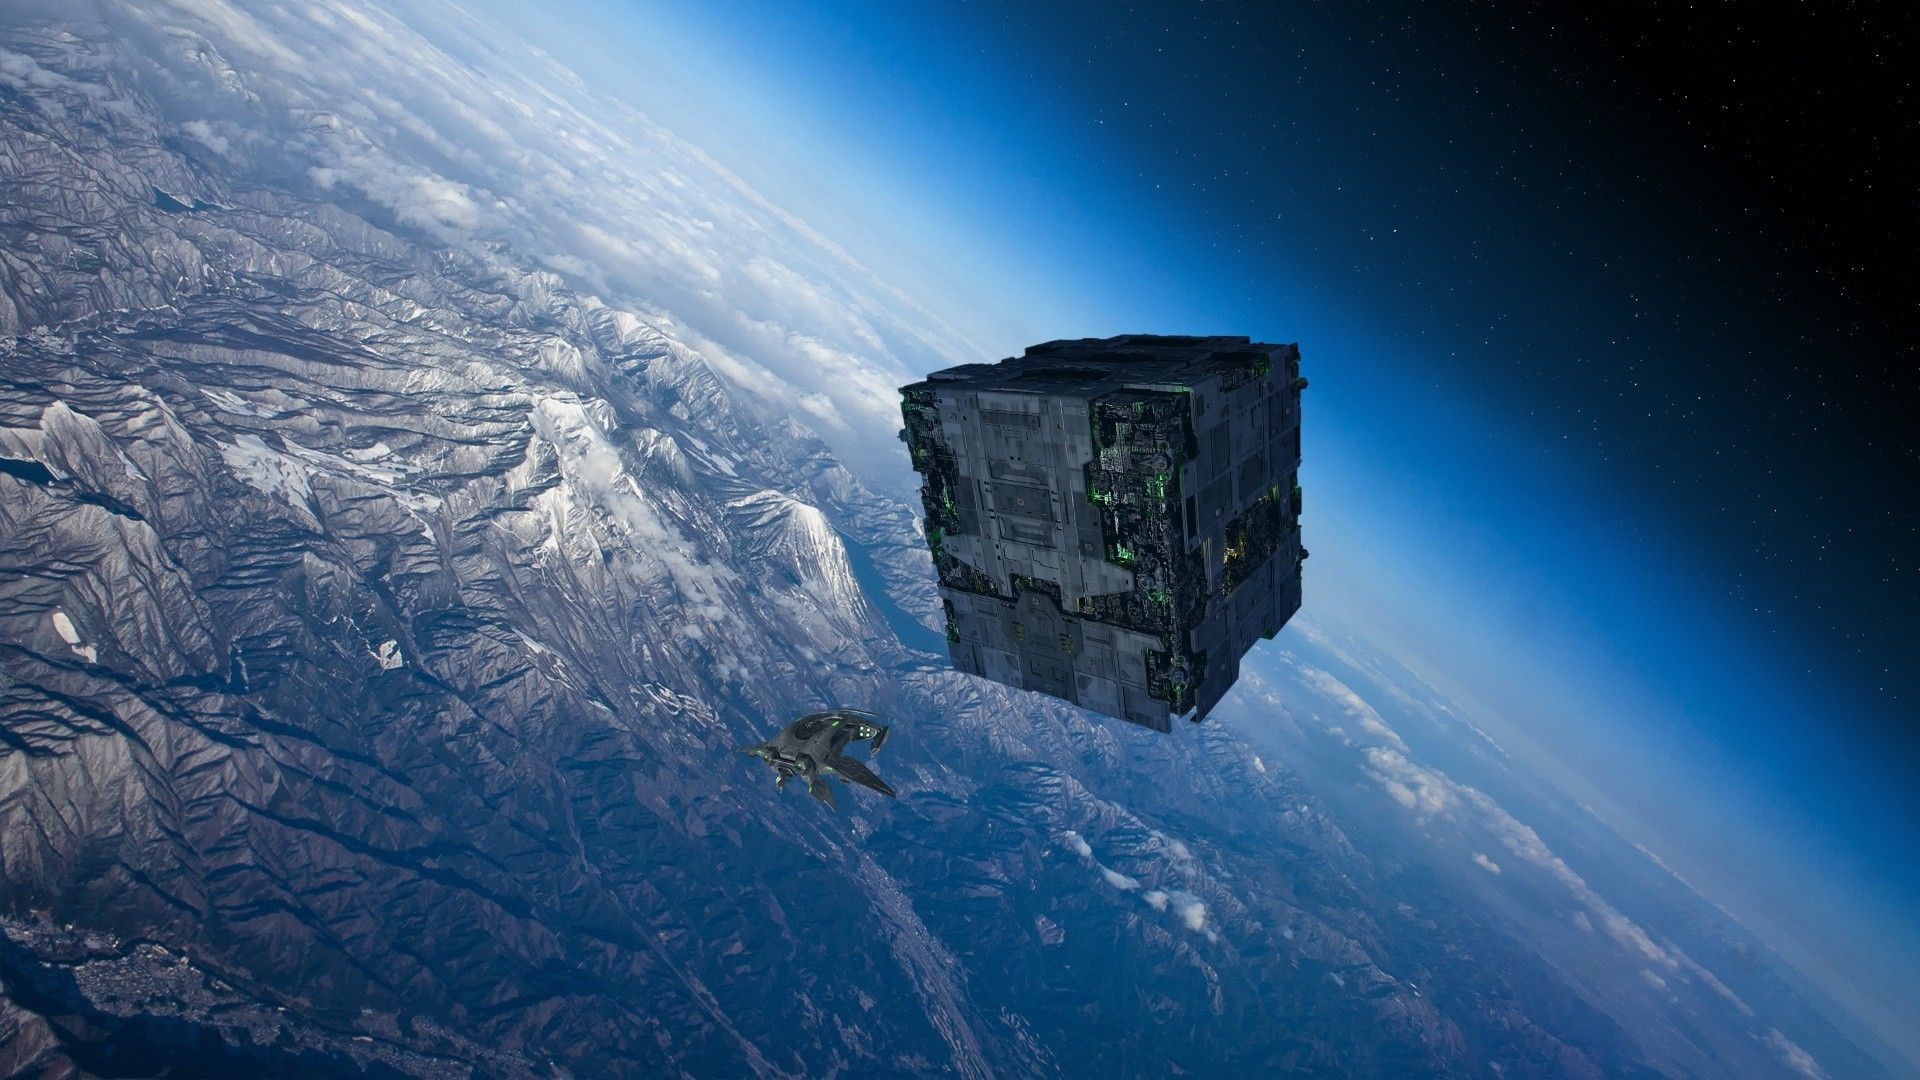 Borg Star Trek Outer Space Science Fiction Wallpaper - Borg Cube - HD Wallpaper 